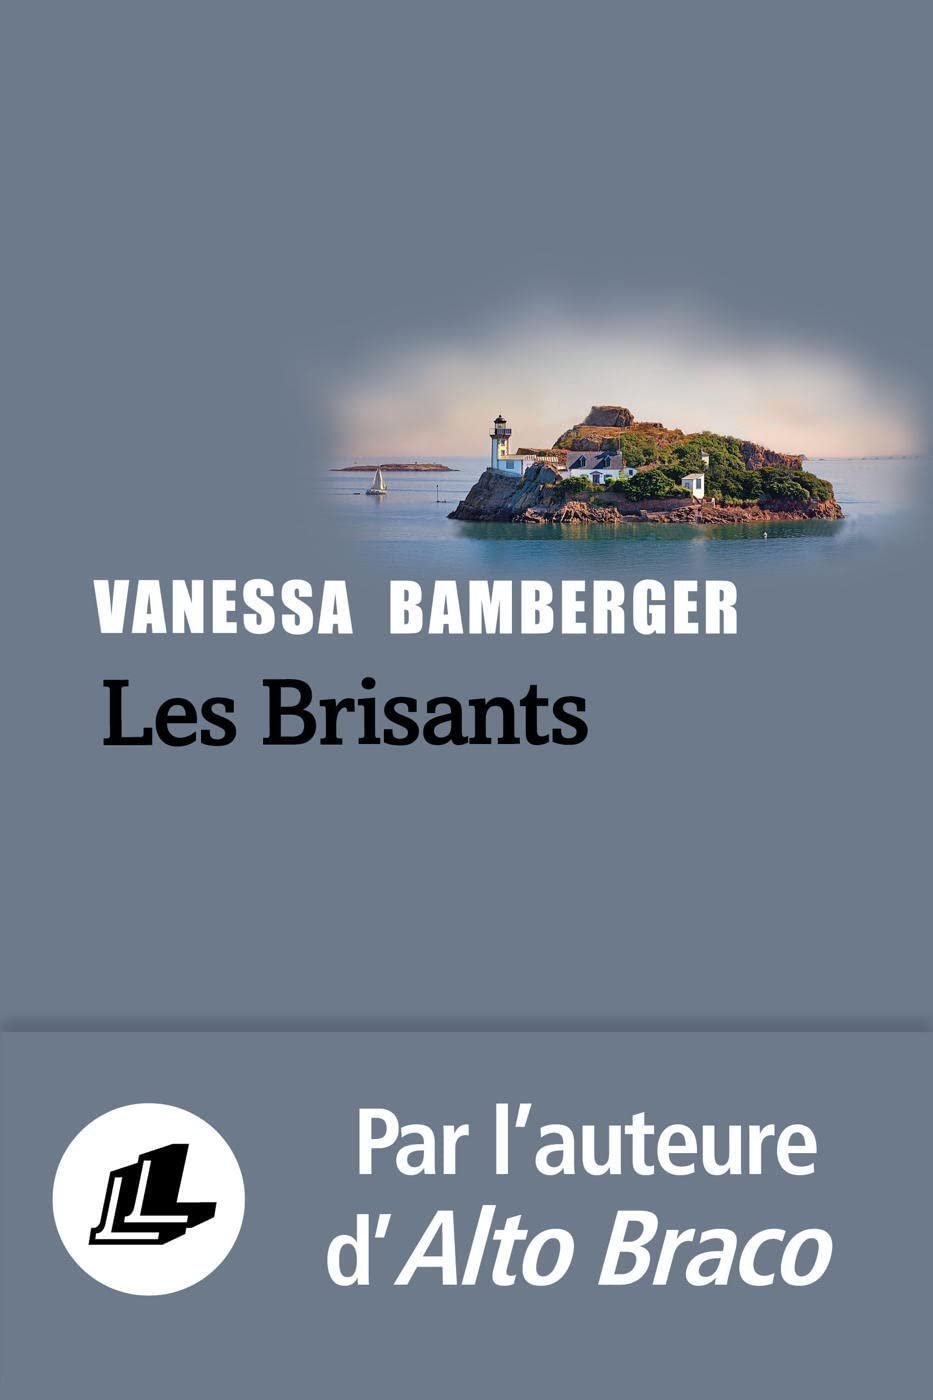 Vanessa Bamberger – Les Brisants